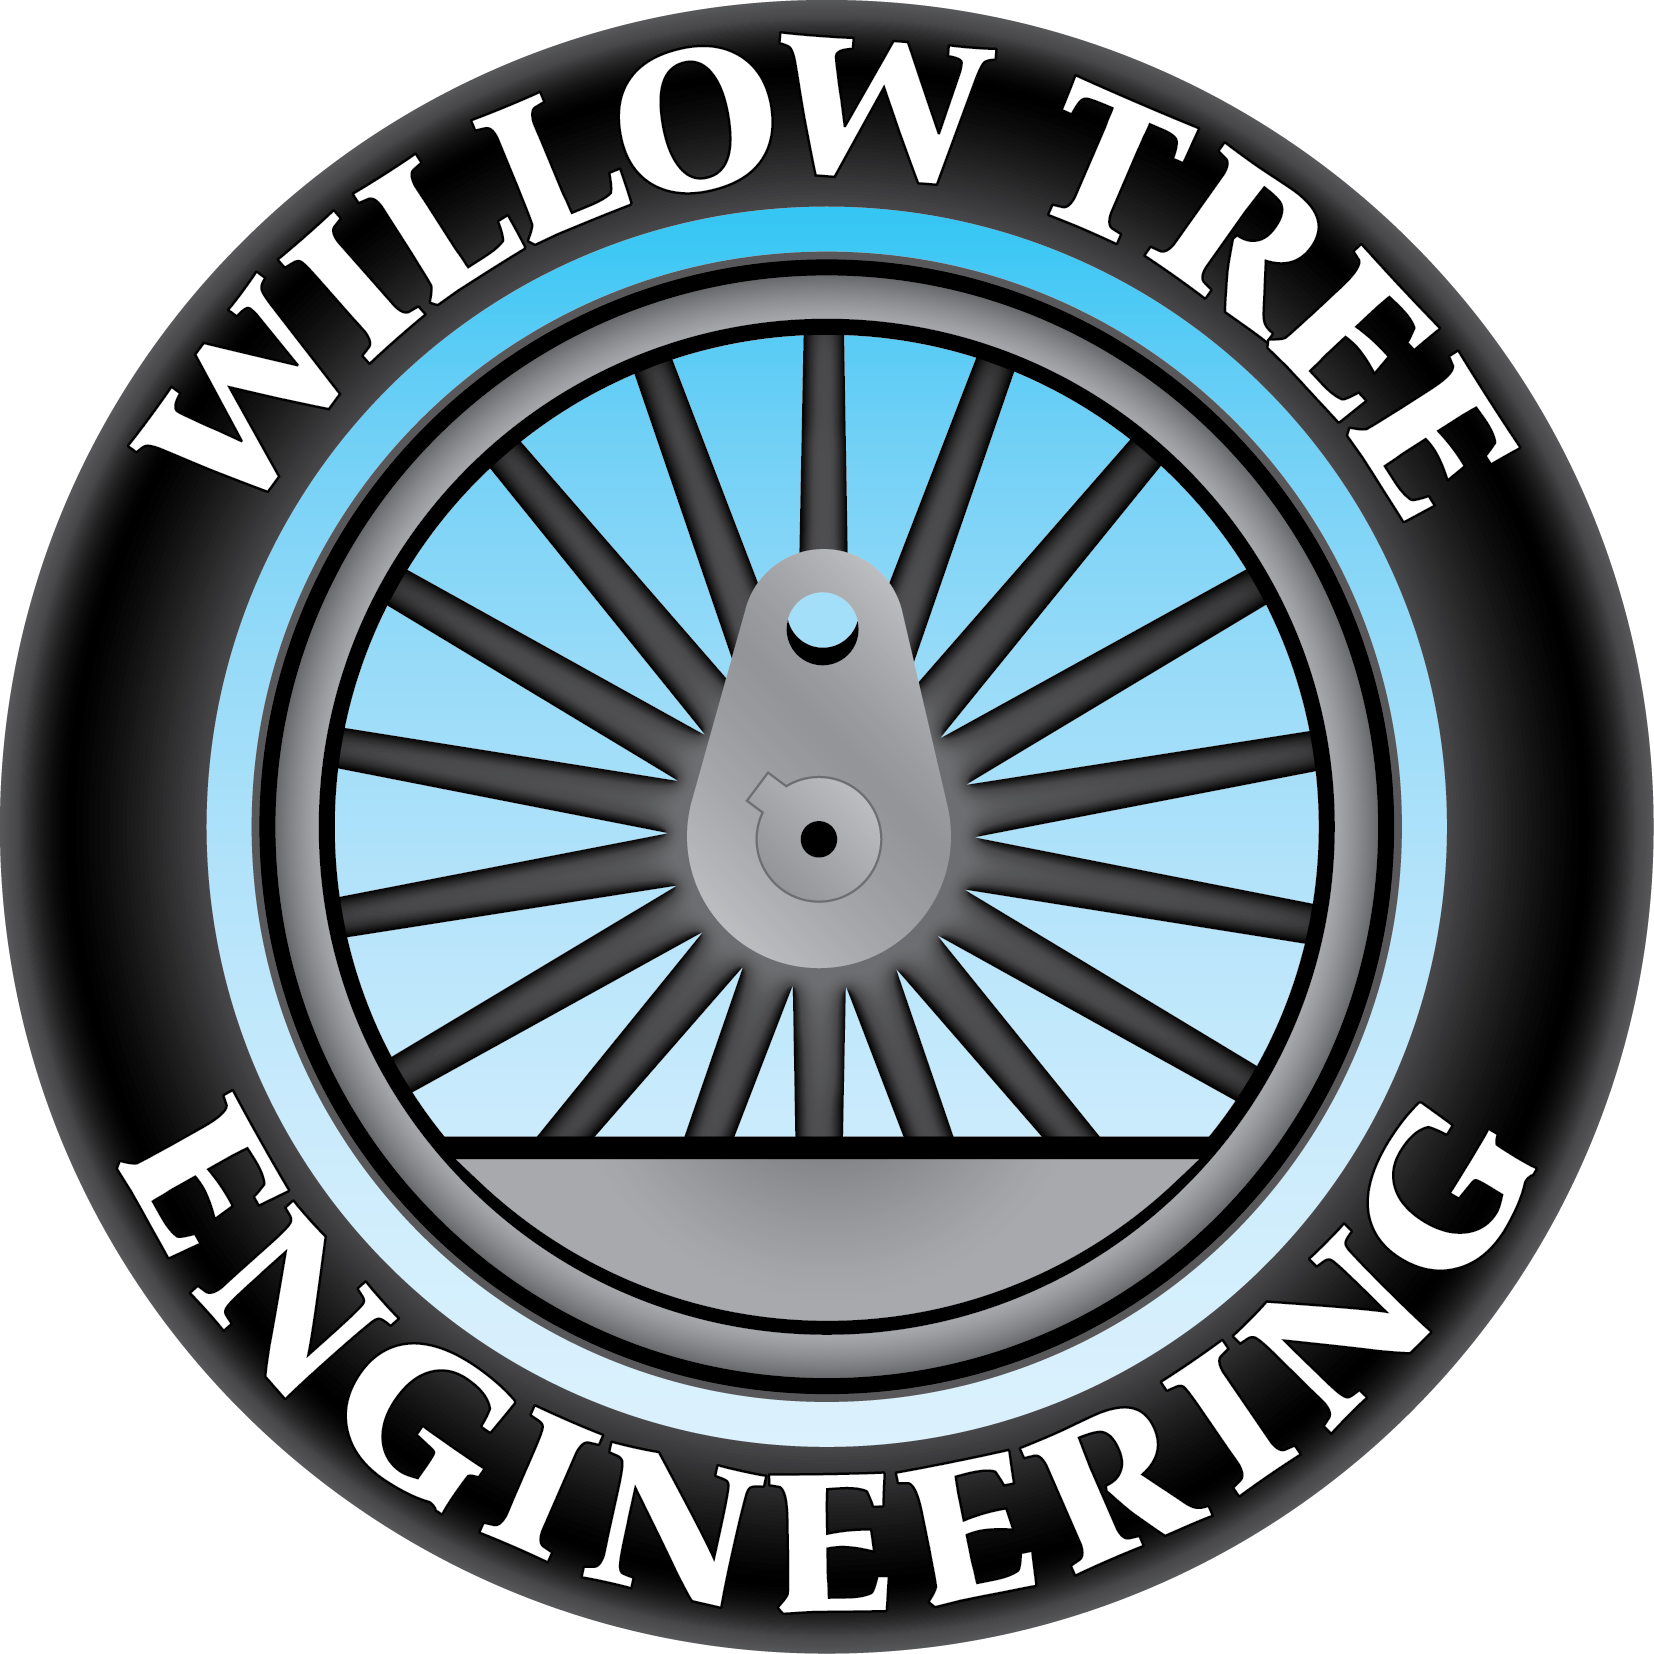 Willow Tree Engineering